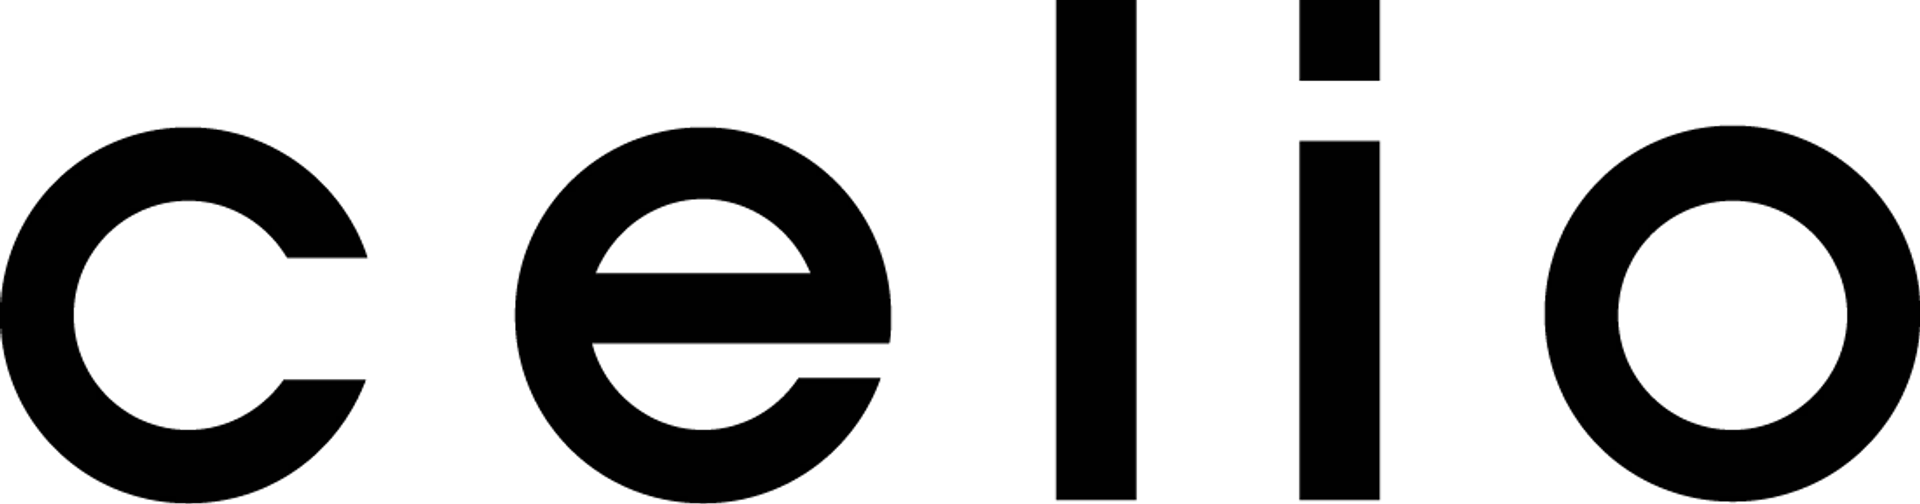 CELIO logo of current flyer